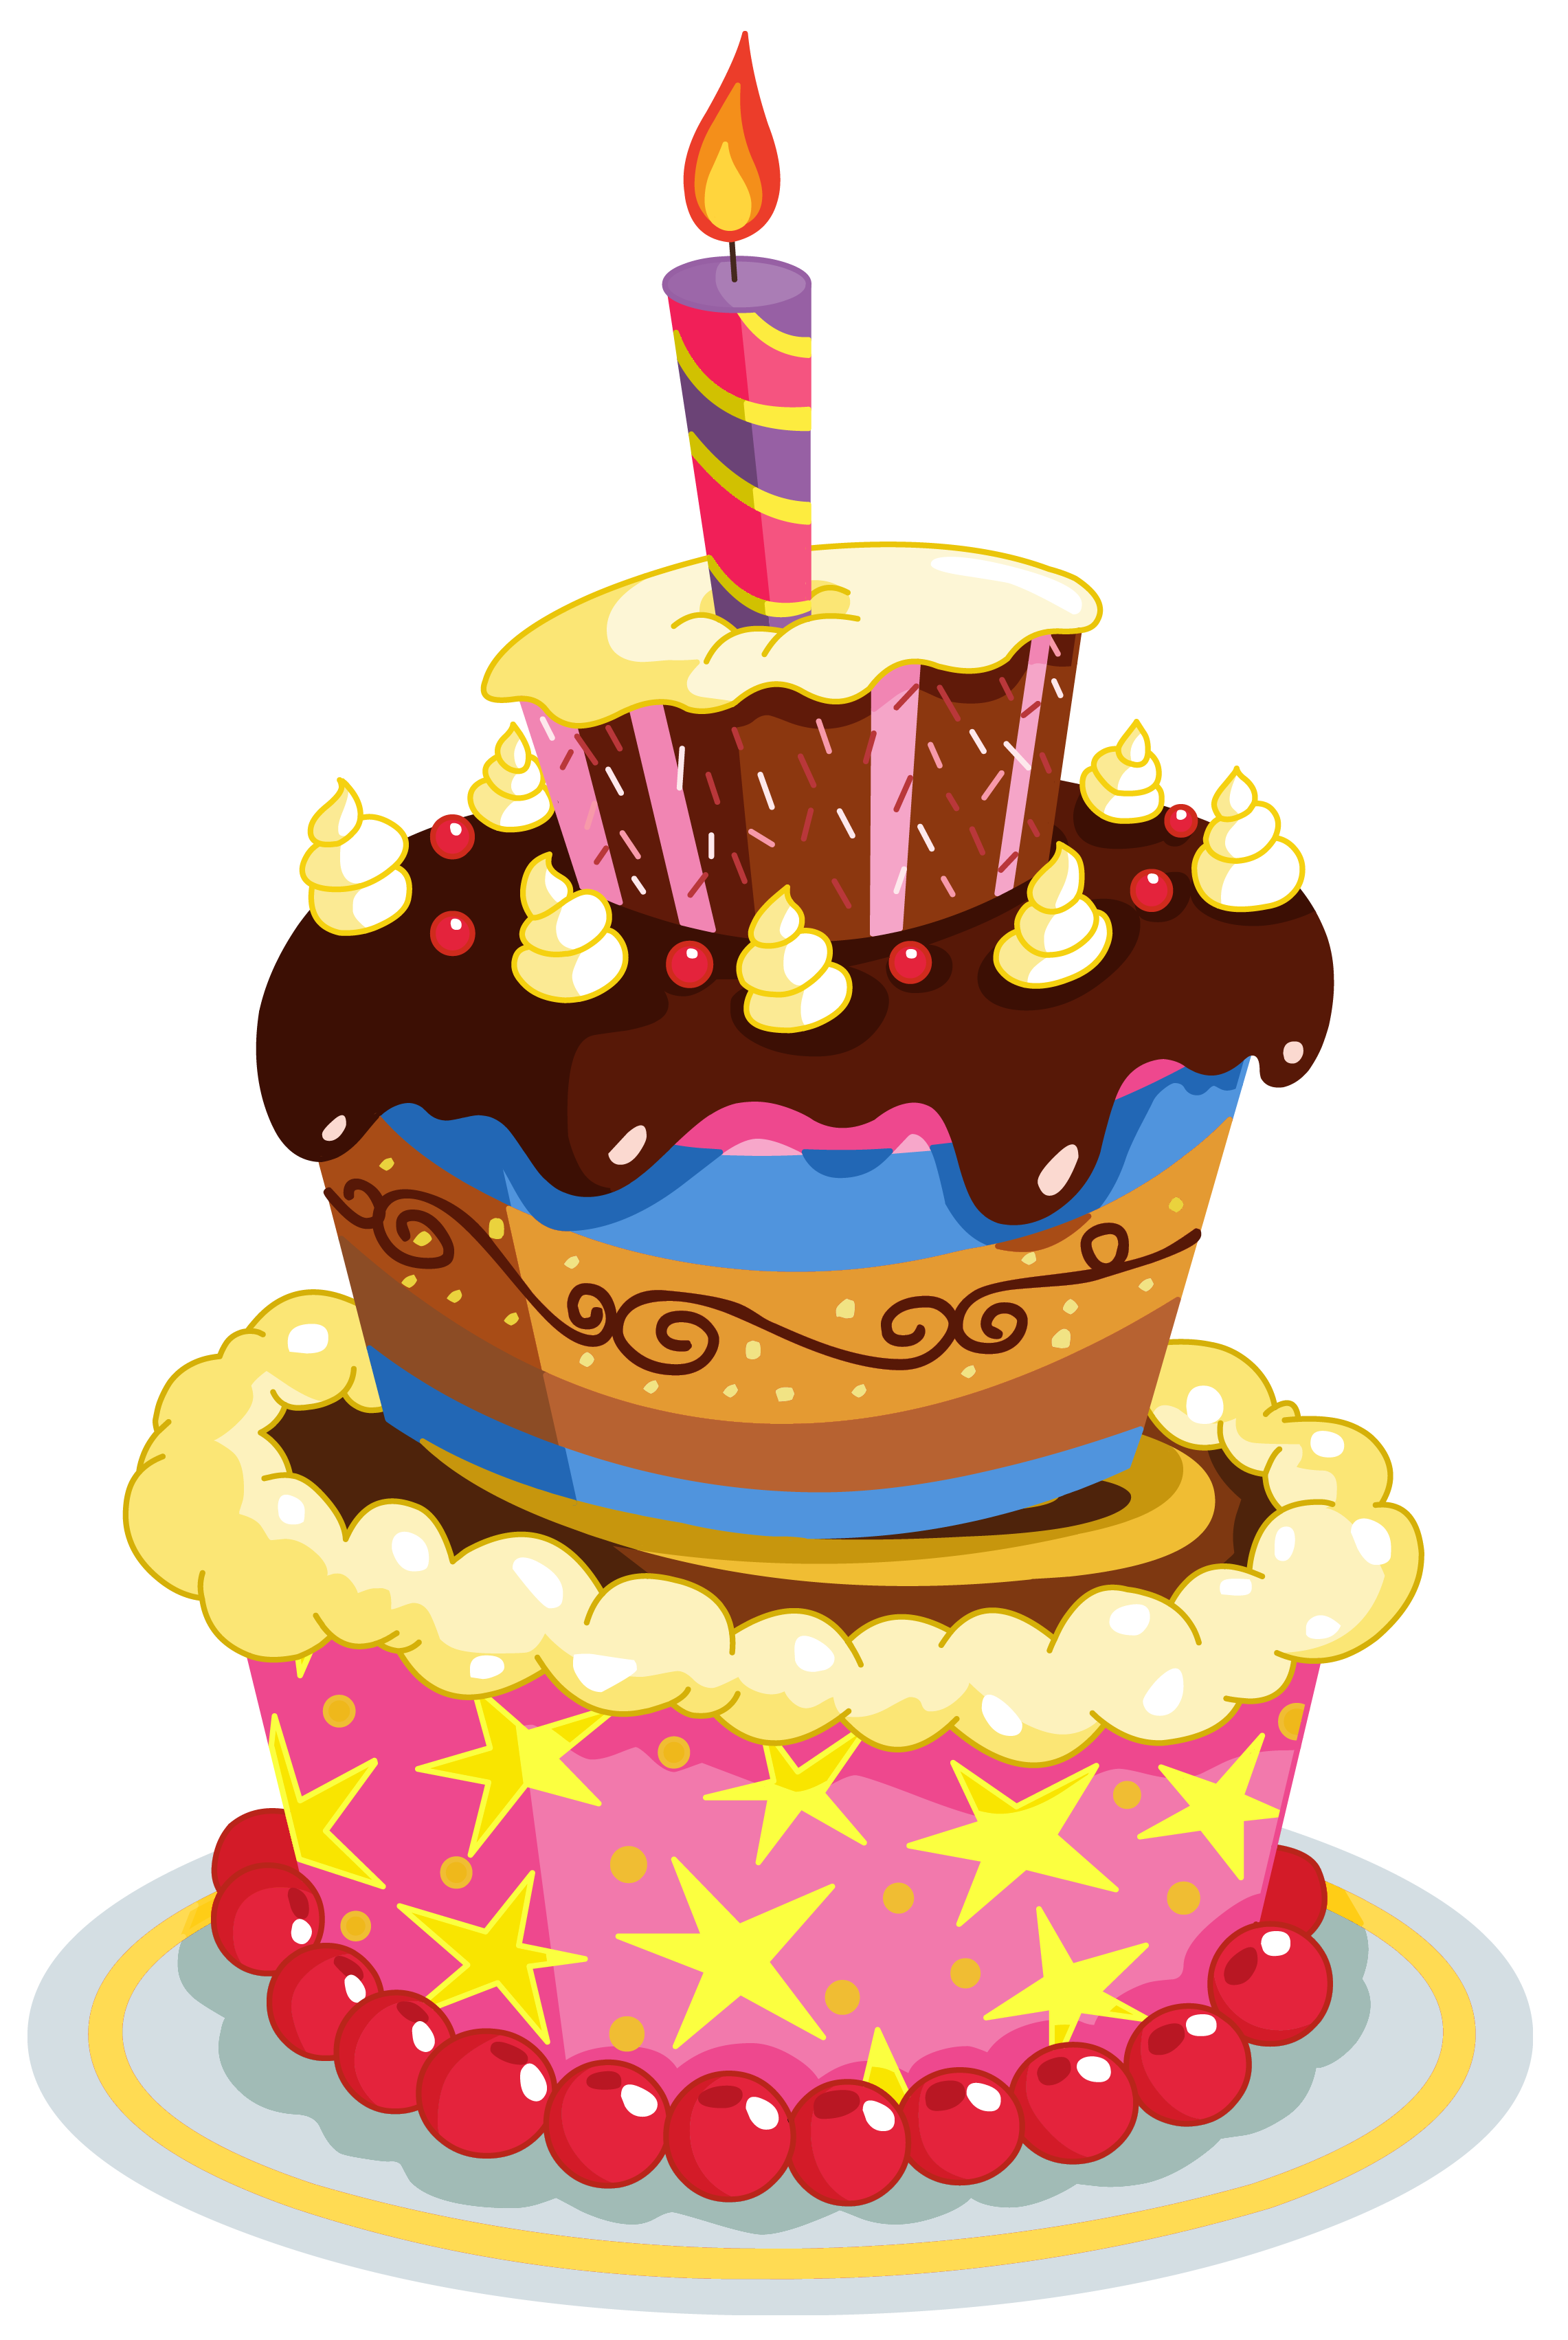 Birthday Cake Torte Fruitcake Chocolate Cake Wedding Cake PNG, Clipart,  Baked Goods, Baking, Berry, Birthday Cake,